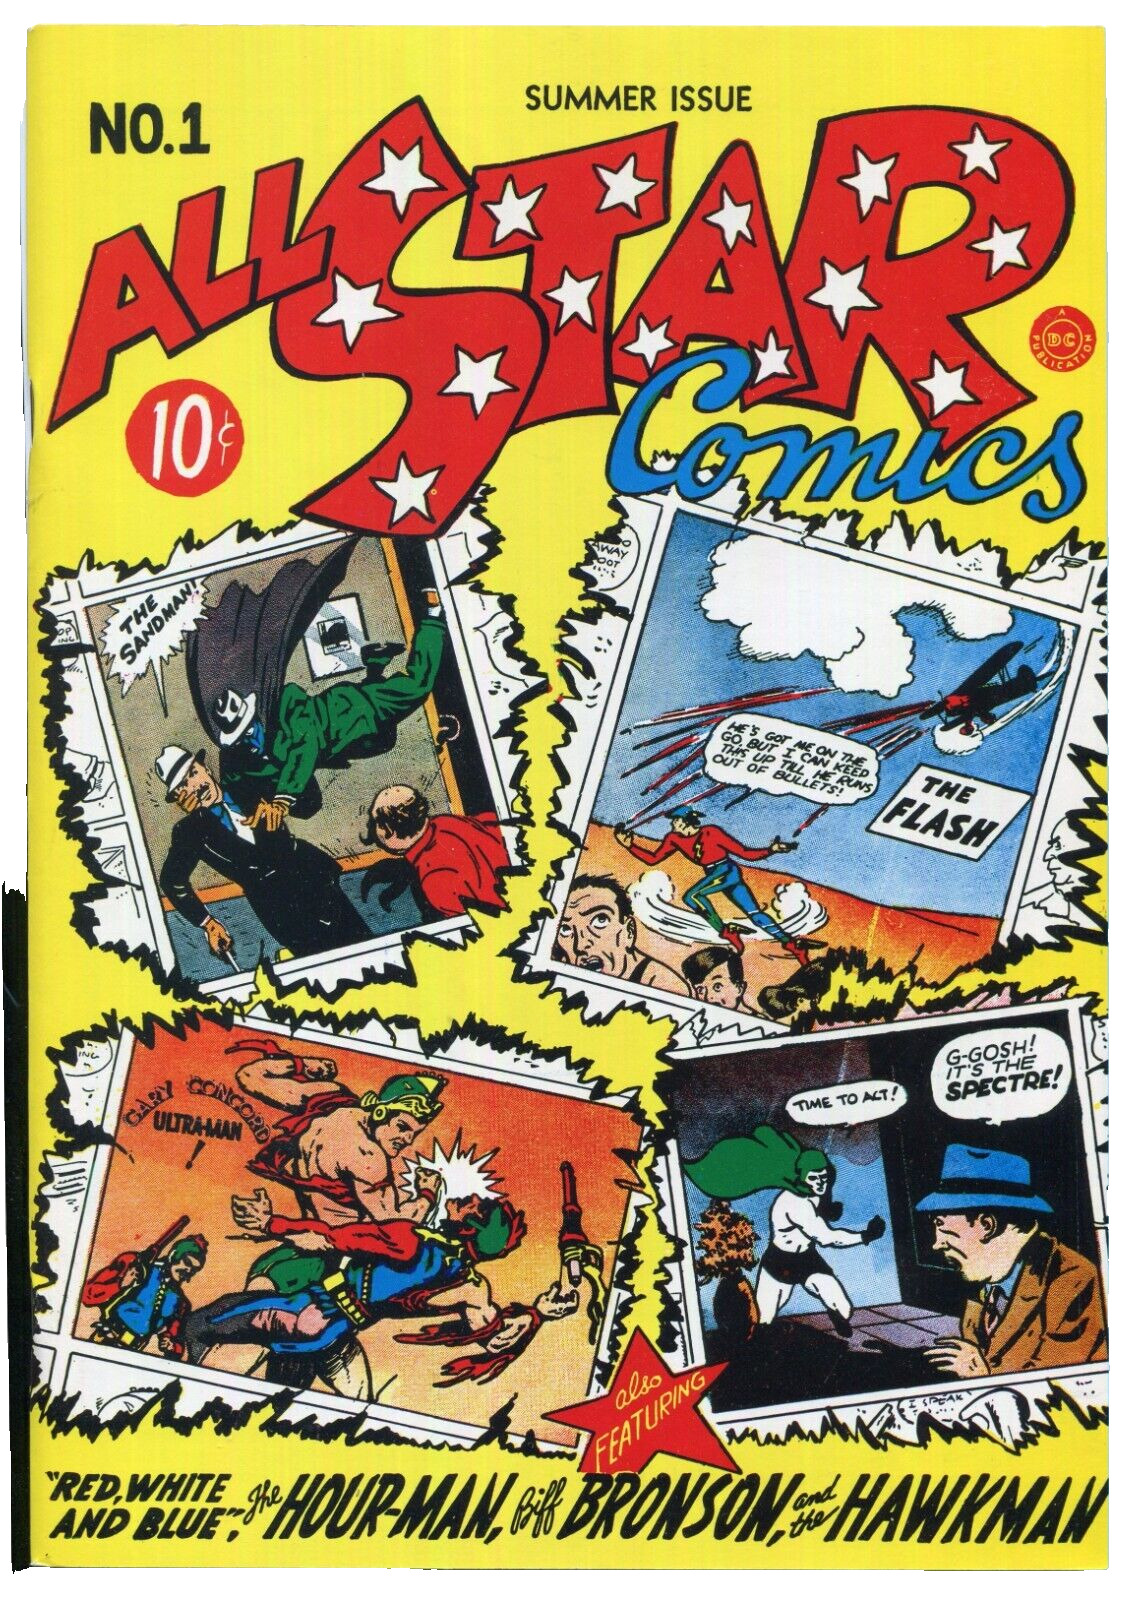 All Star Comics # 1 - 1940 - Sandman - Spectre - Flash - Hour-Man - Flashback